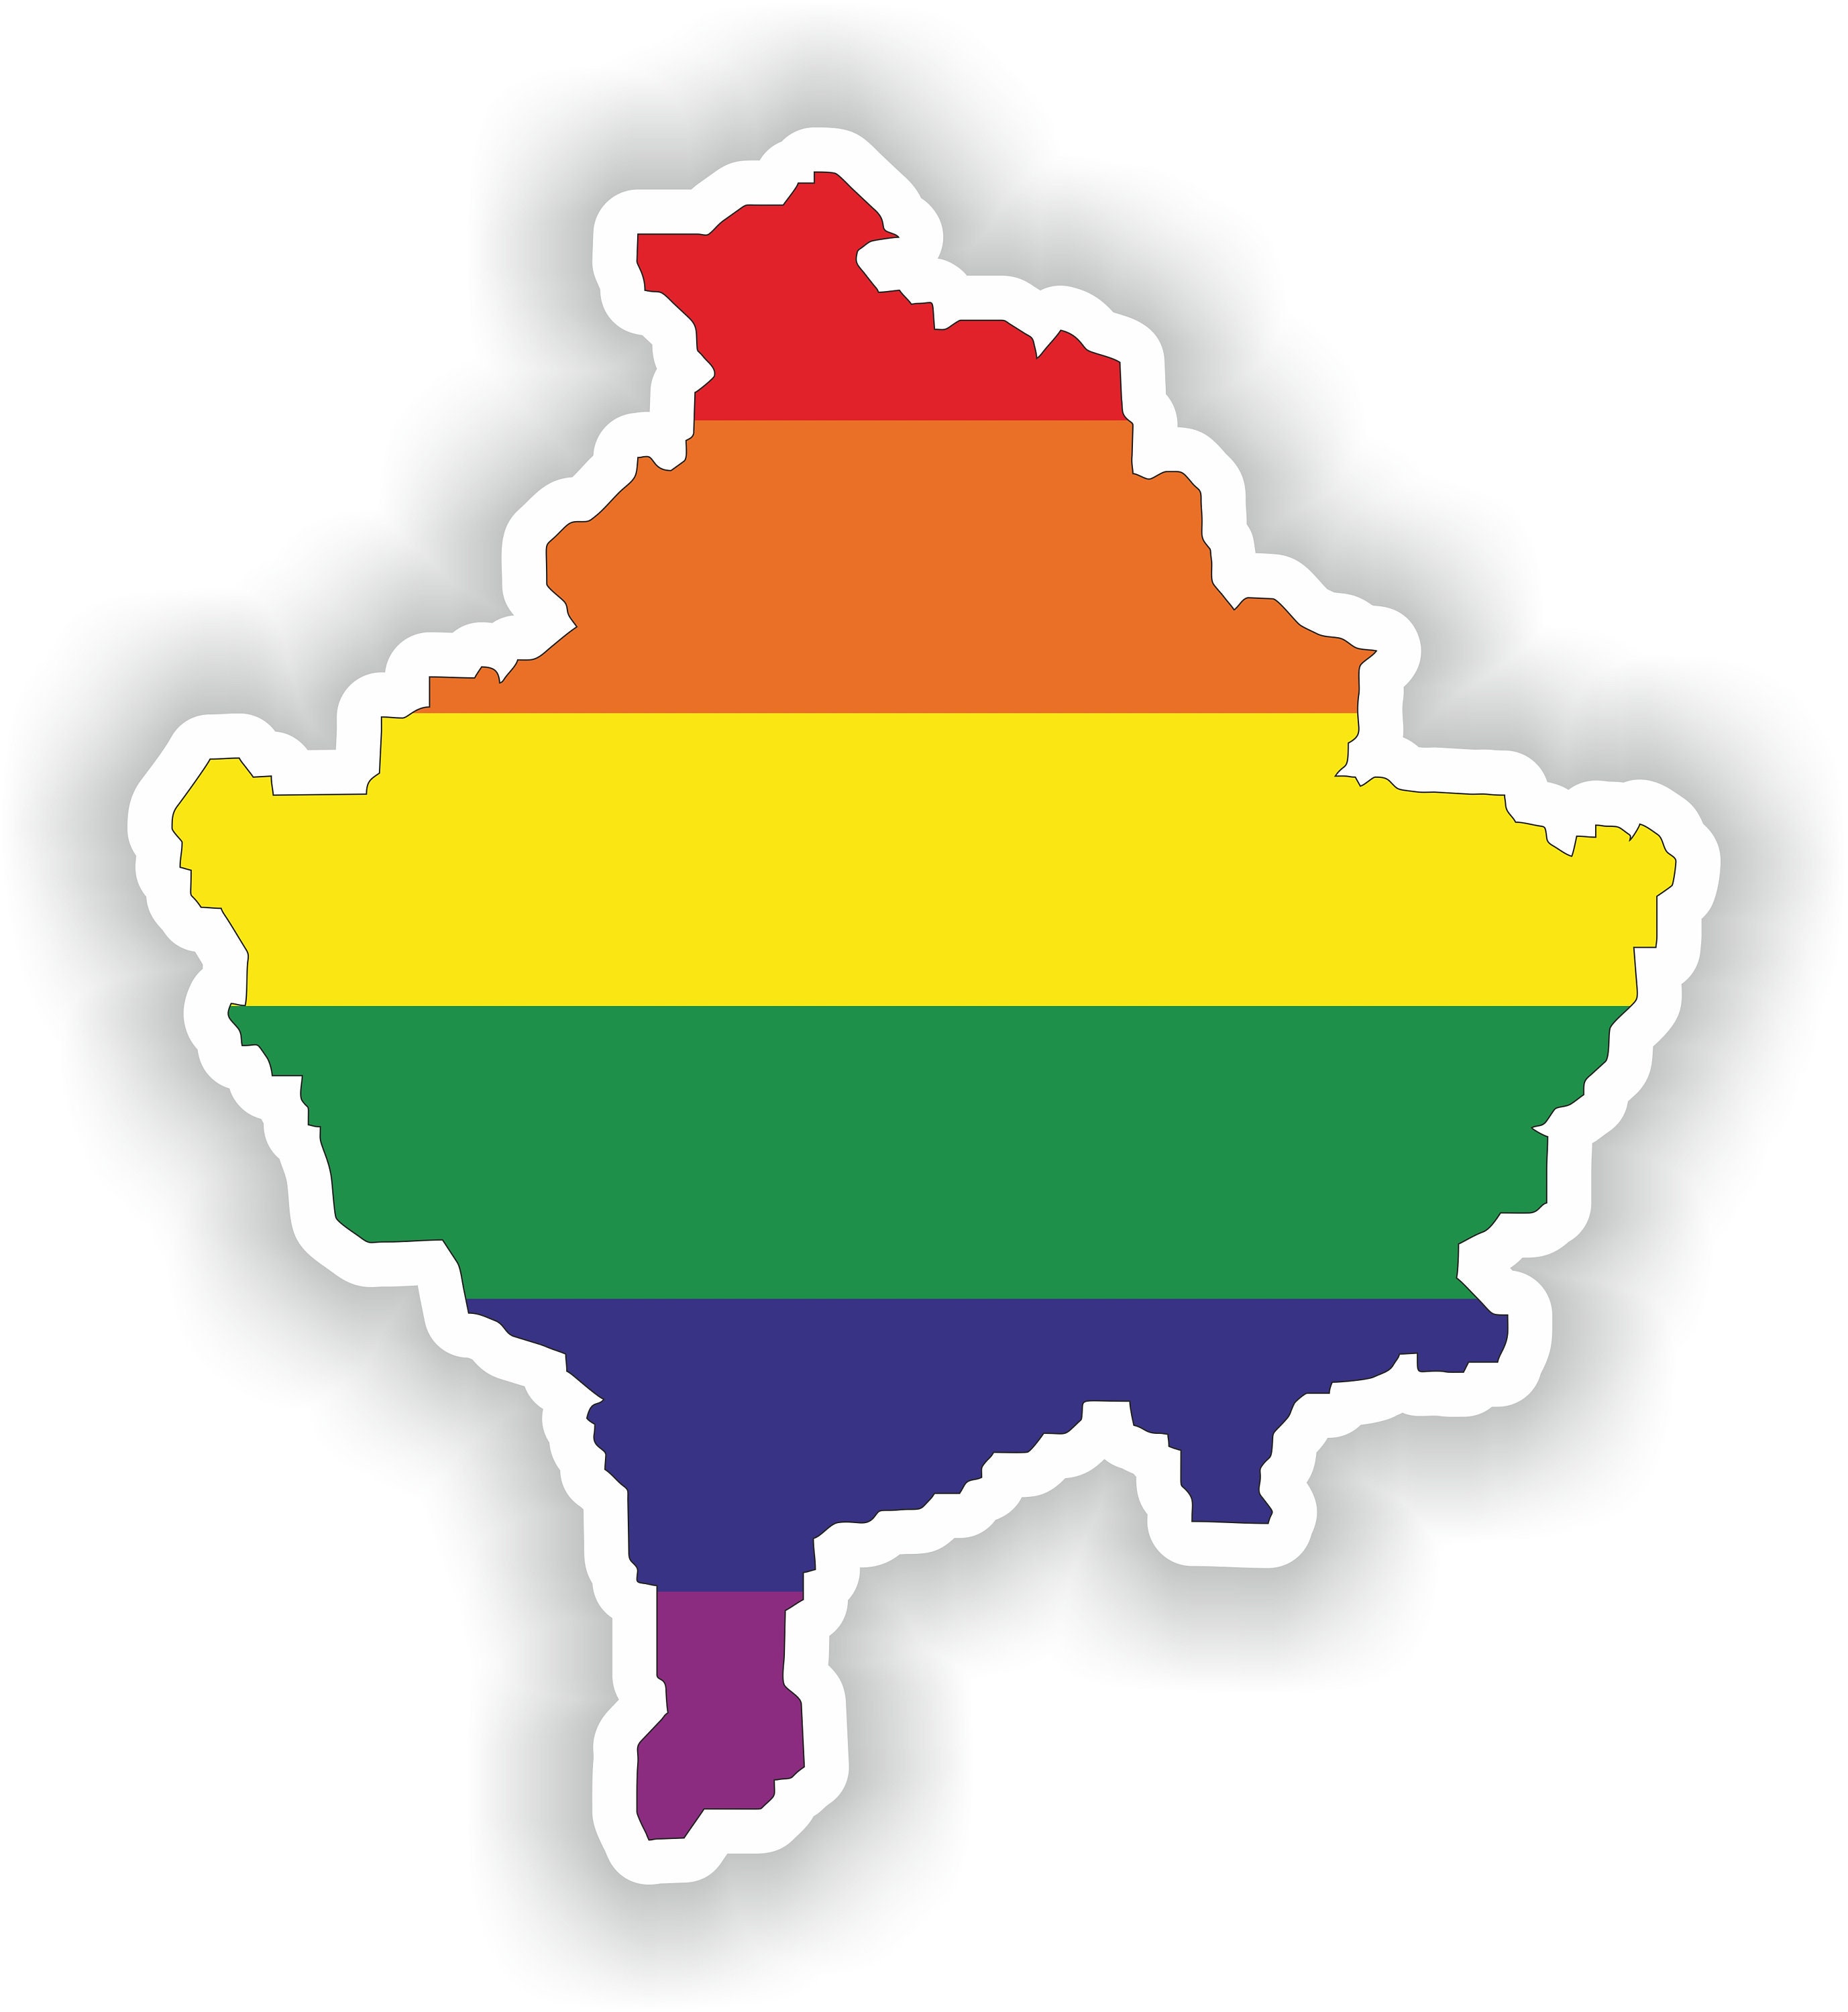 Kosovo Gay Rainbow Map Flag Sticker for Laptop Book Fridge